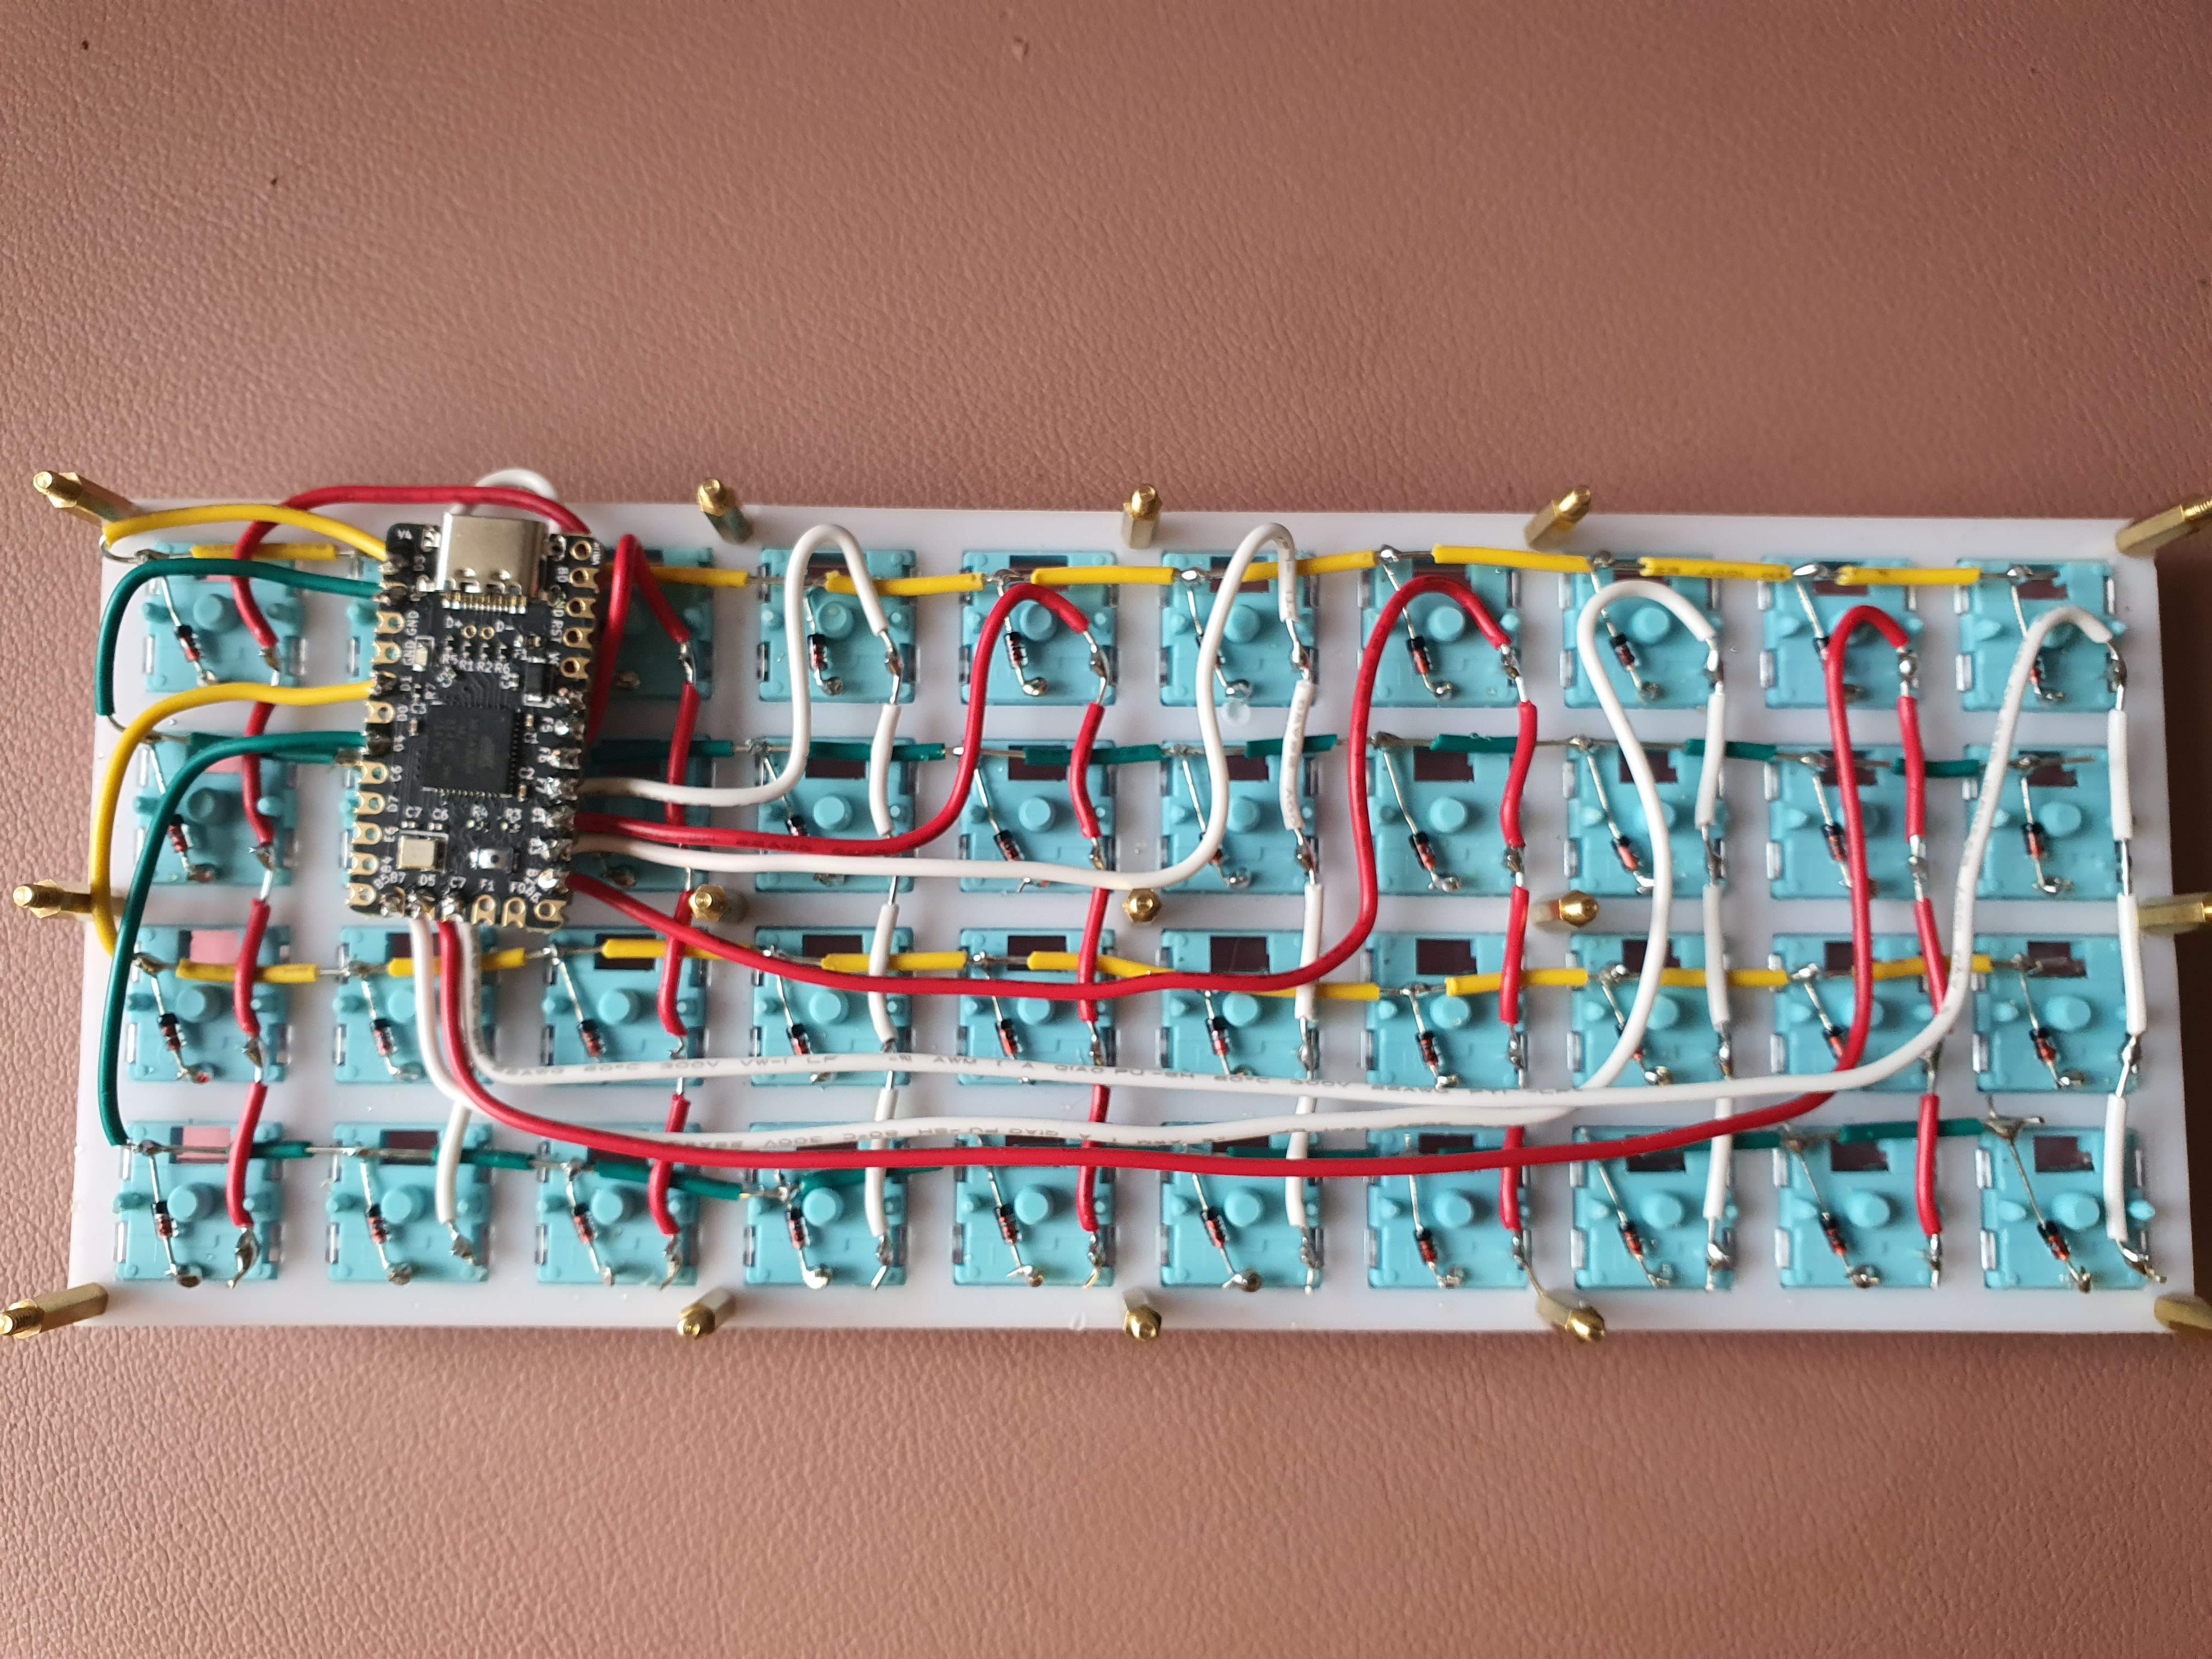 braet-soldered-to-microcontroller.jpg